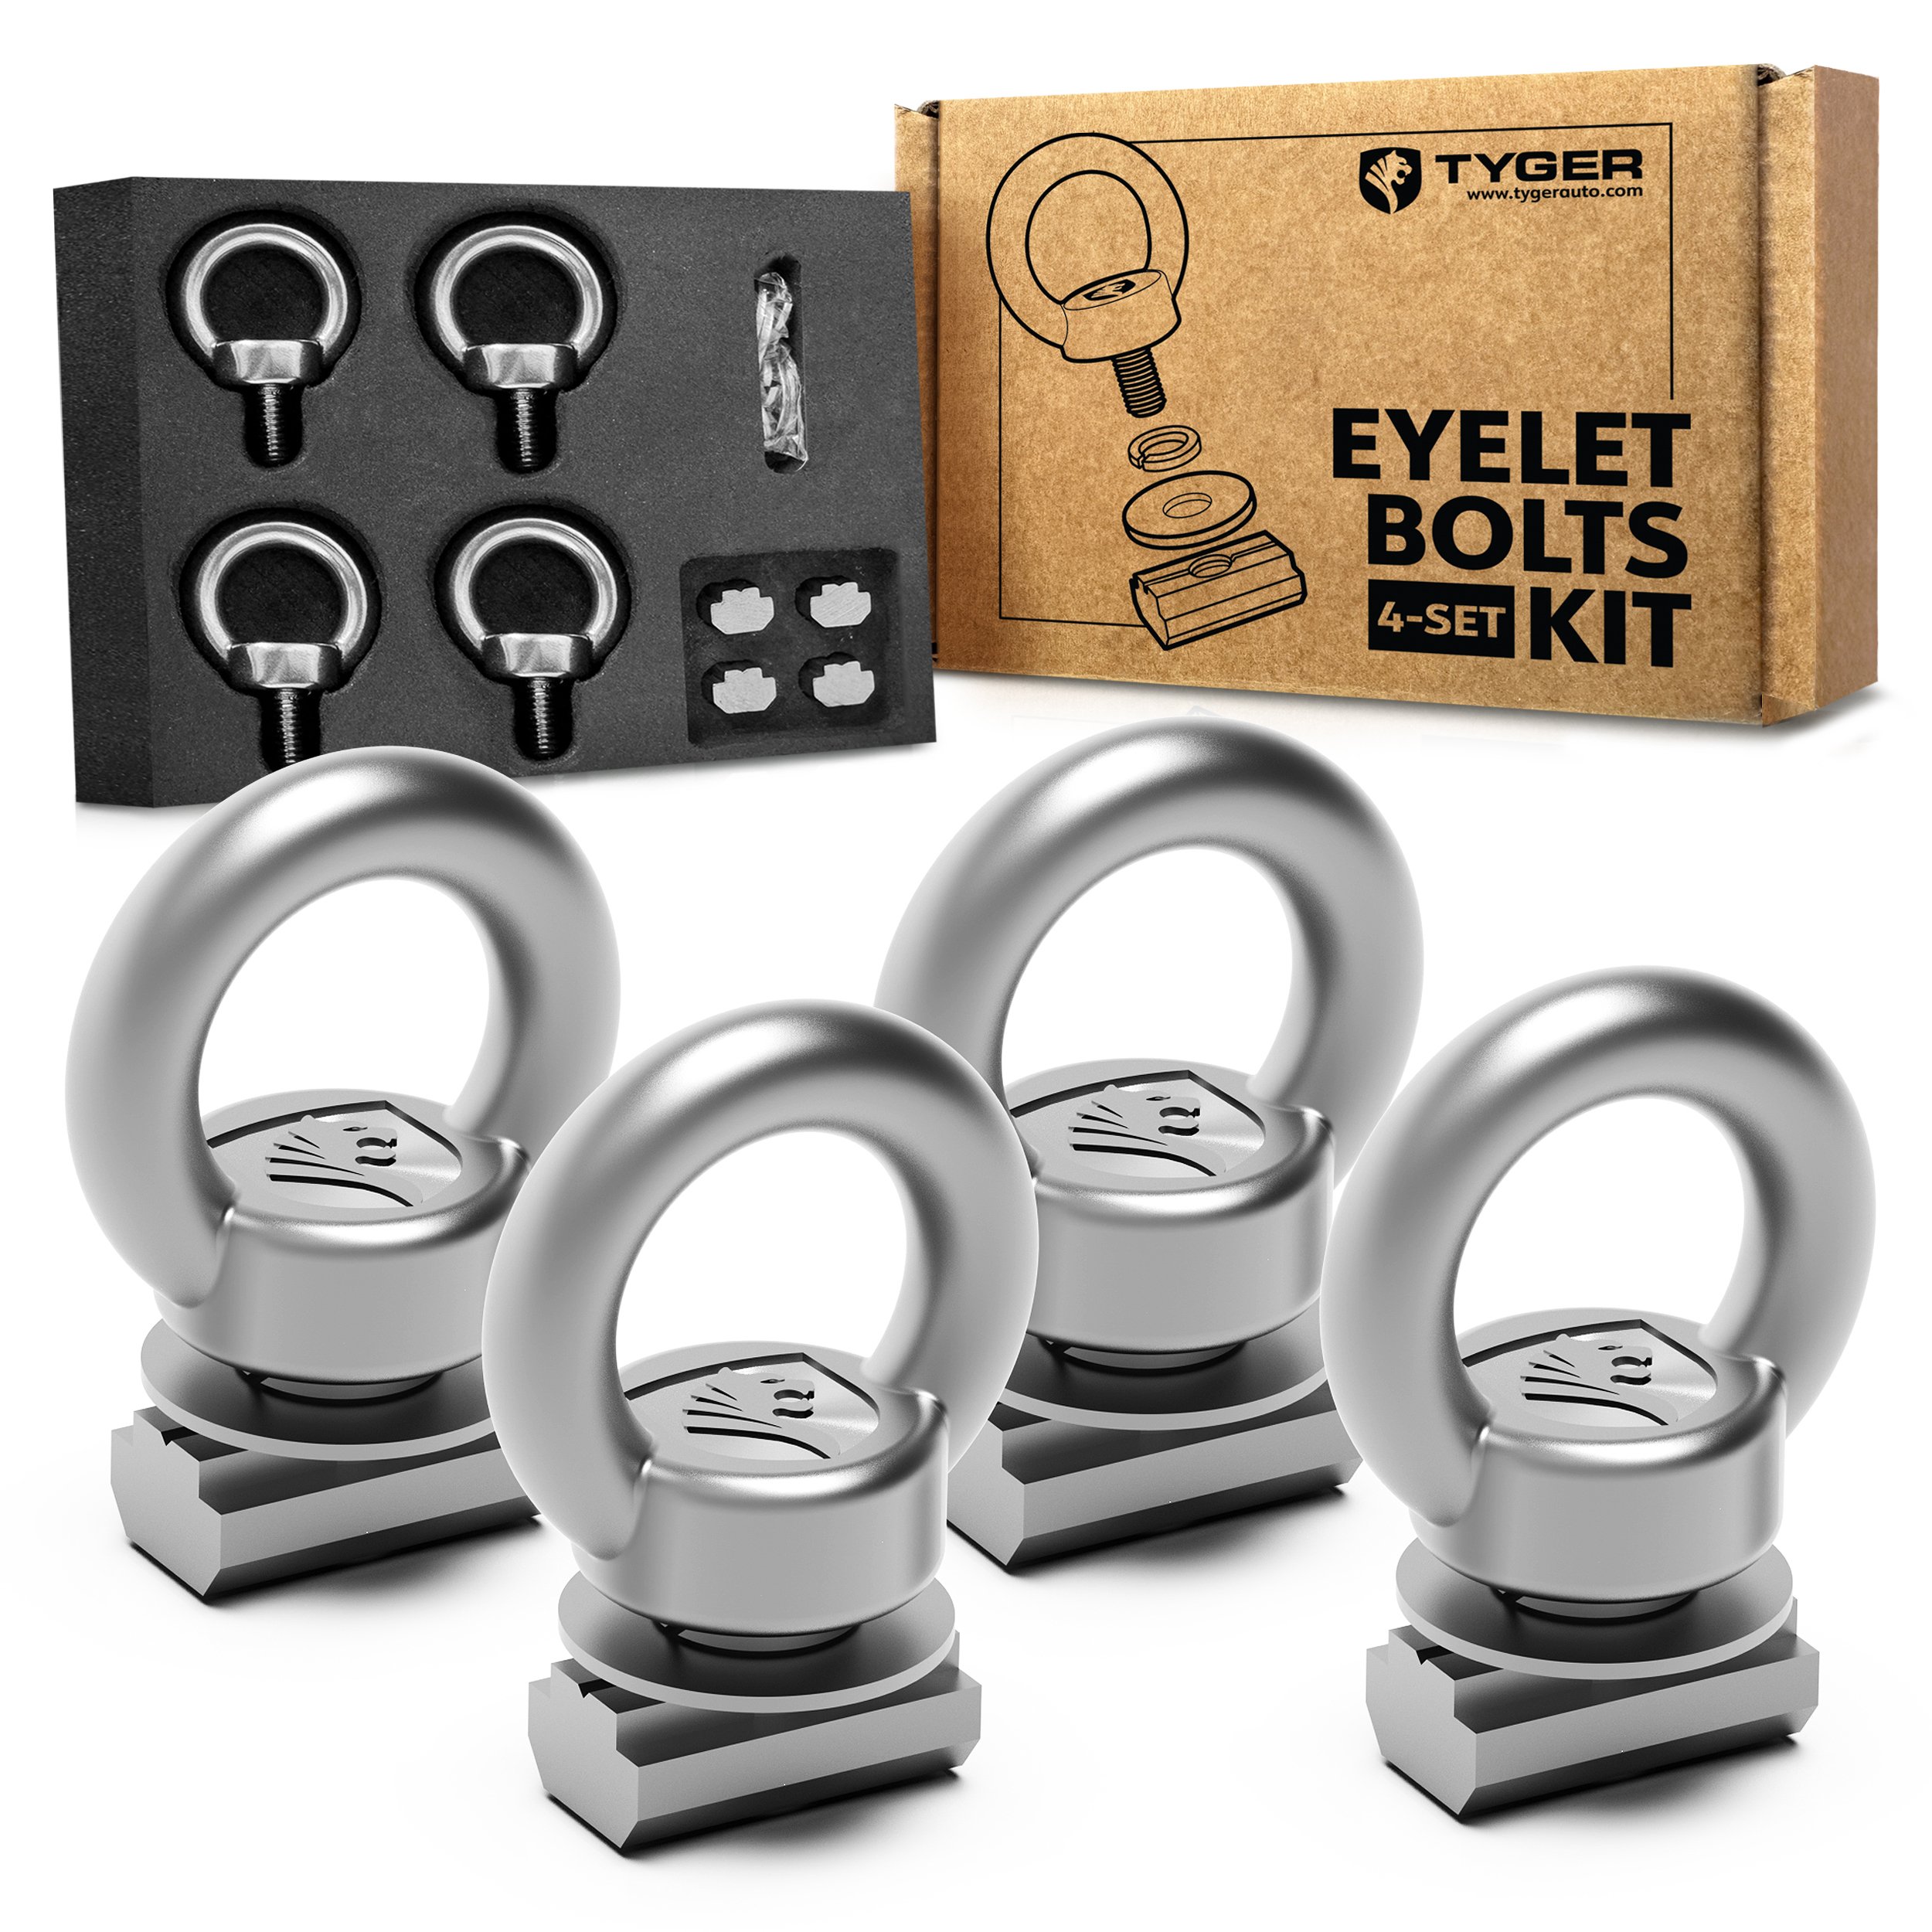 Add-on Eyelet Bolt Adventure Kit for Roof Racks | 4 Sets